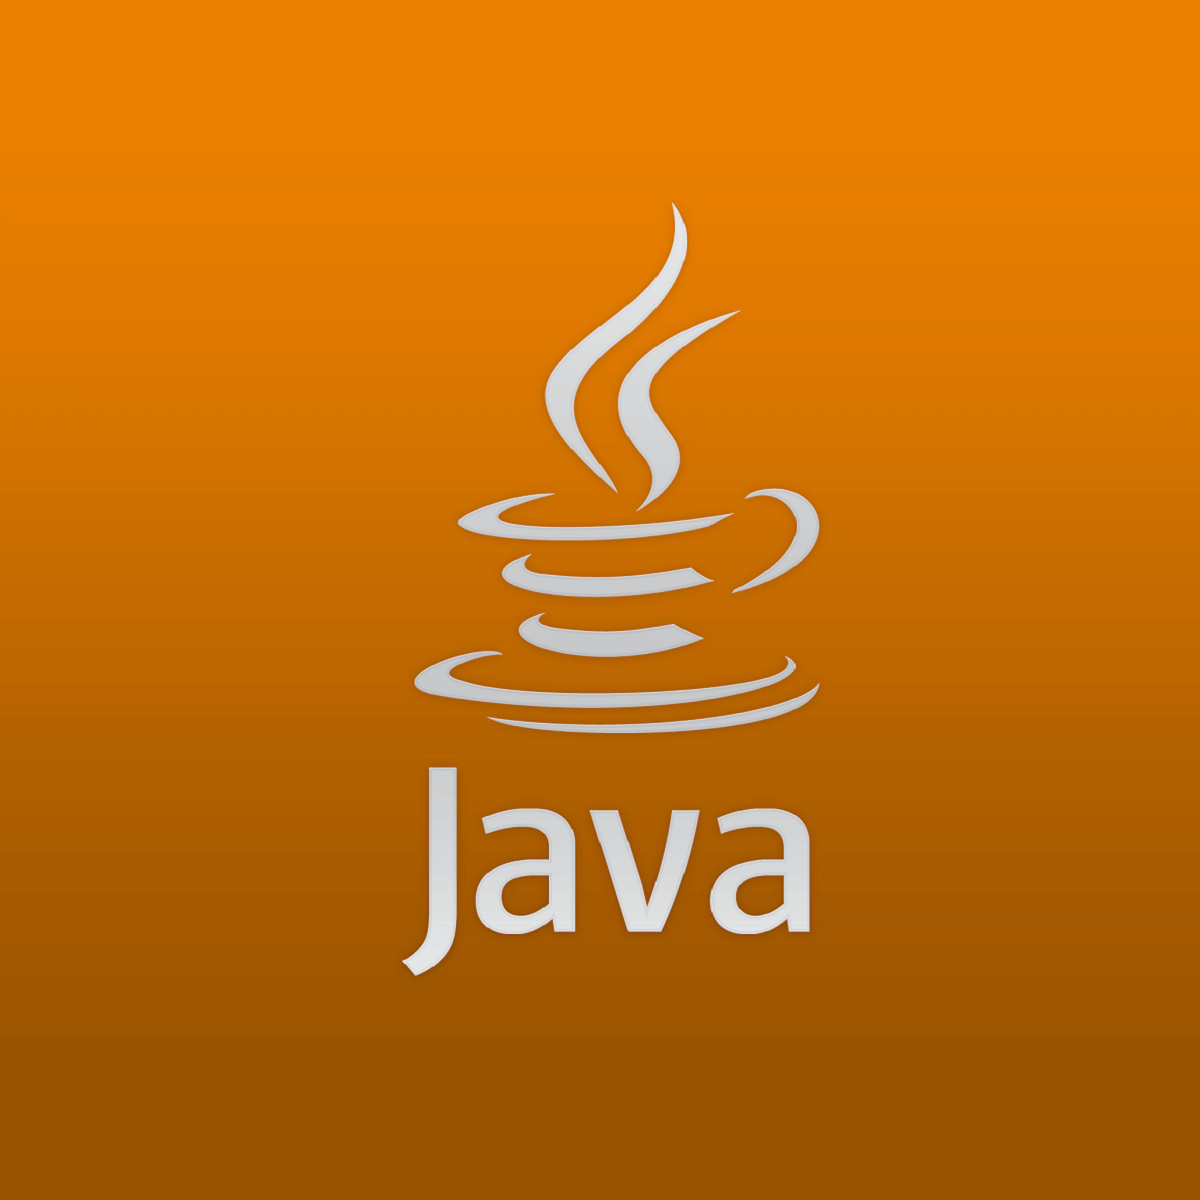 java jdk 6 free download for windows 8 32 bit